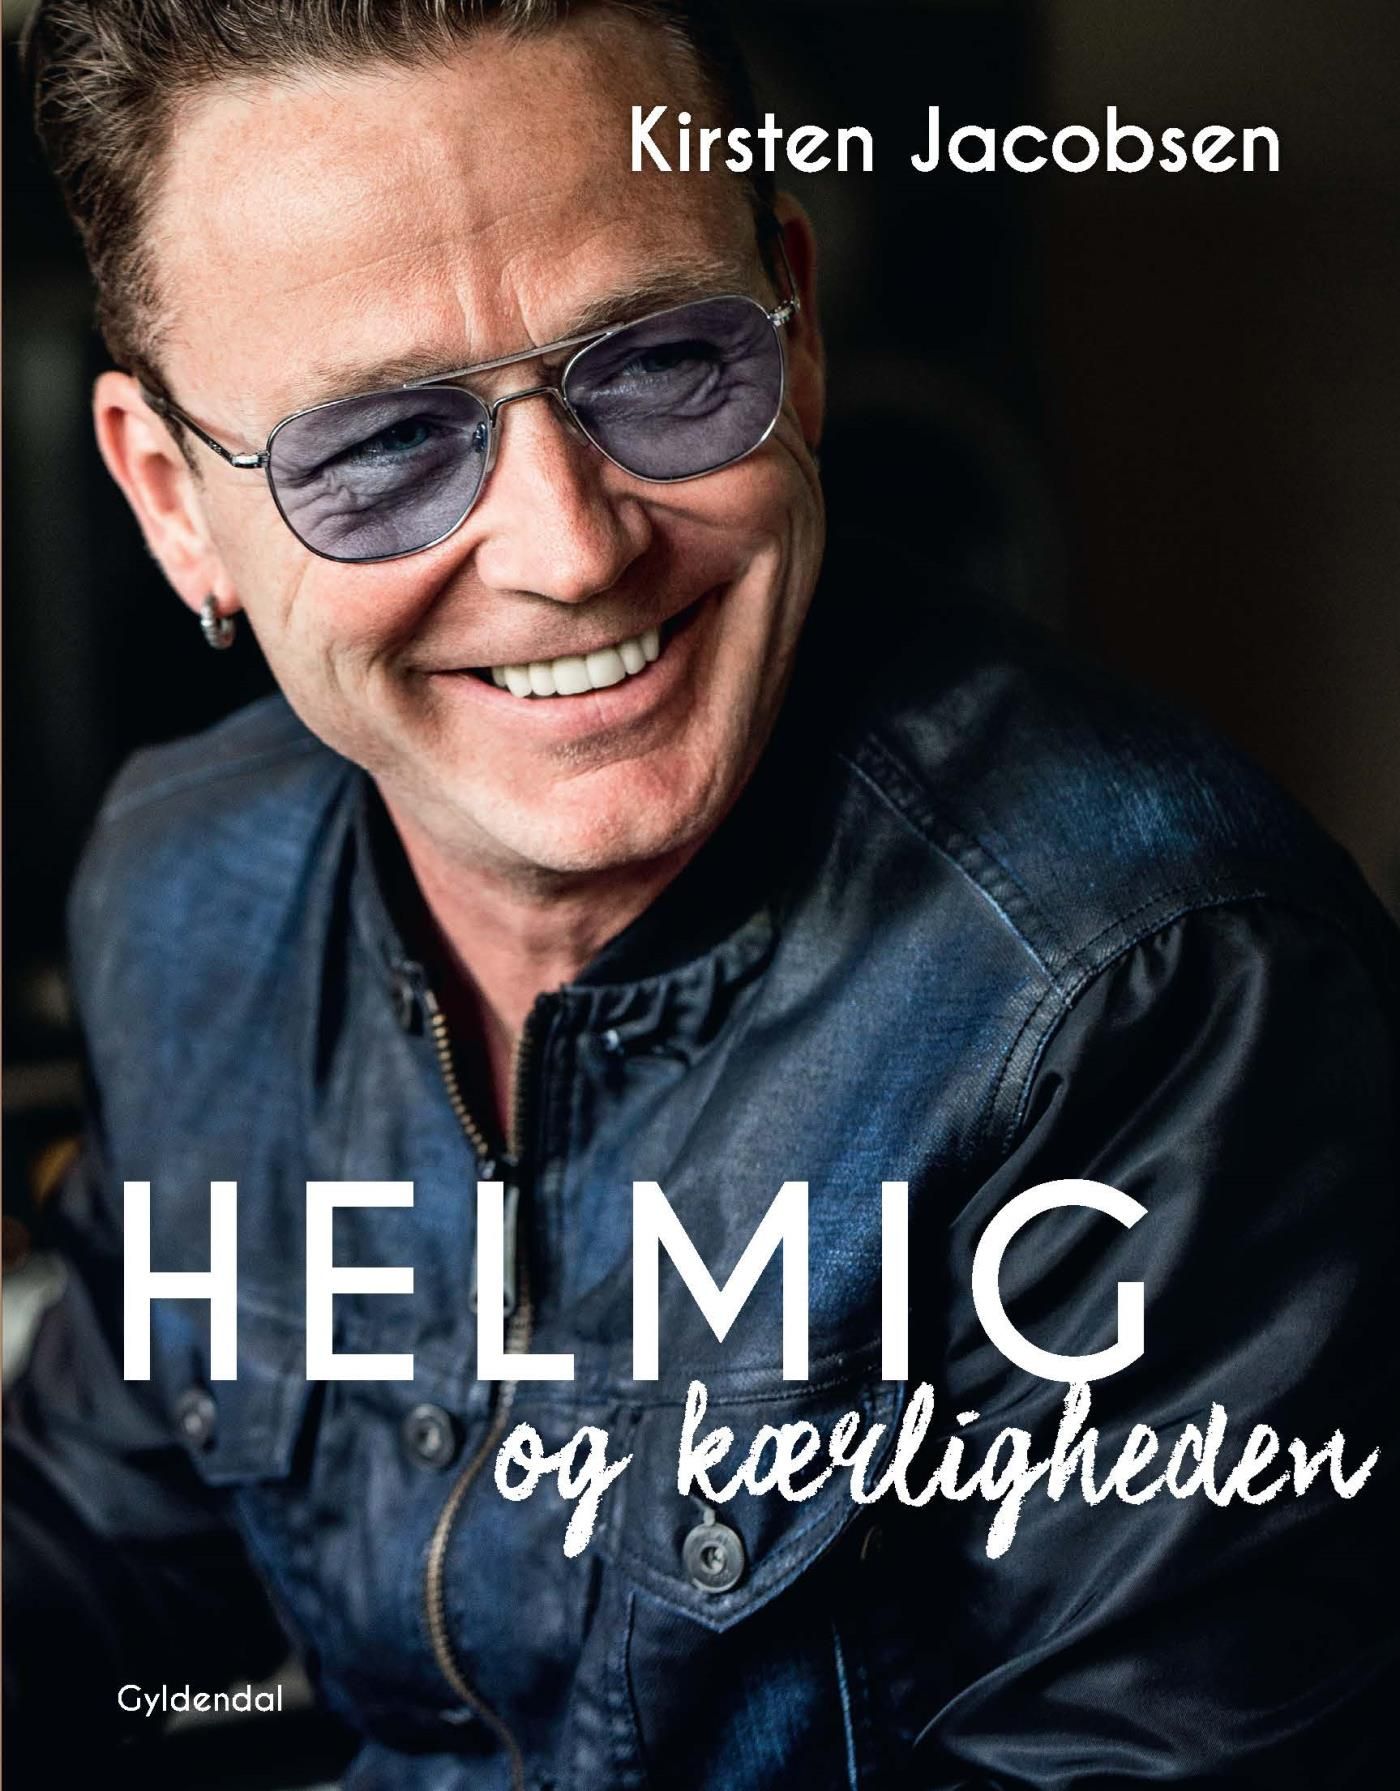 Helmig og kærligheden, eBook by Thomas Helmig, Kirsten Jacobsen